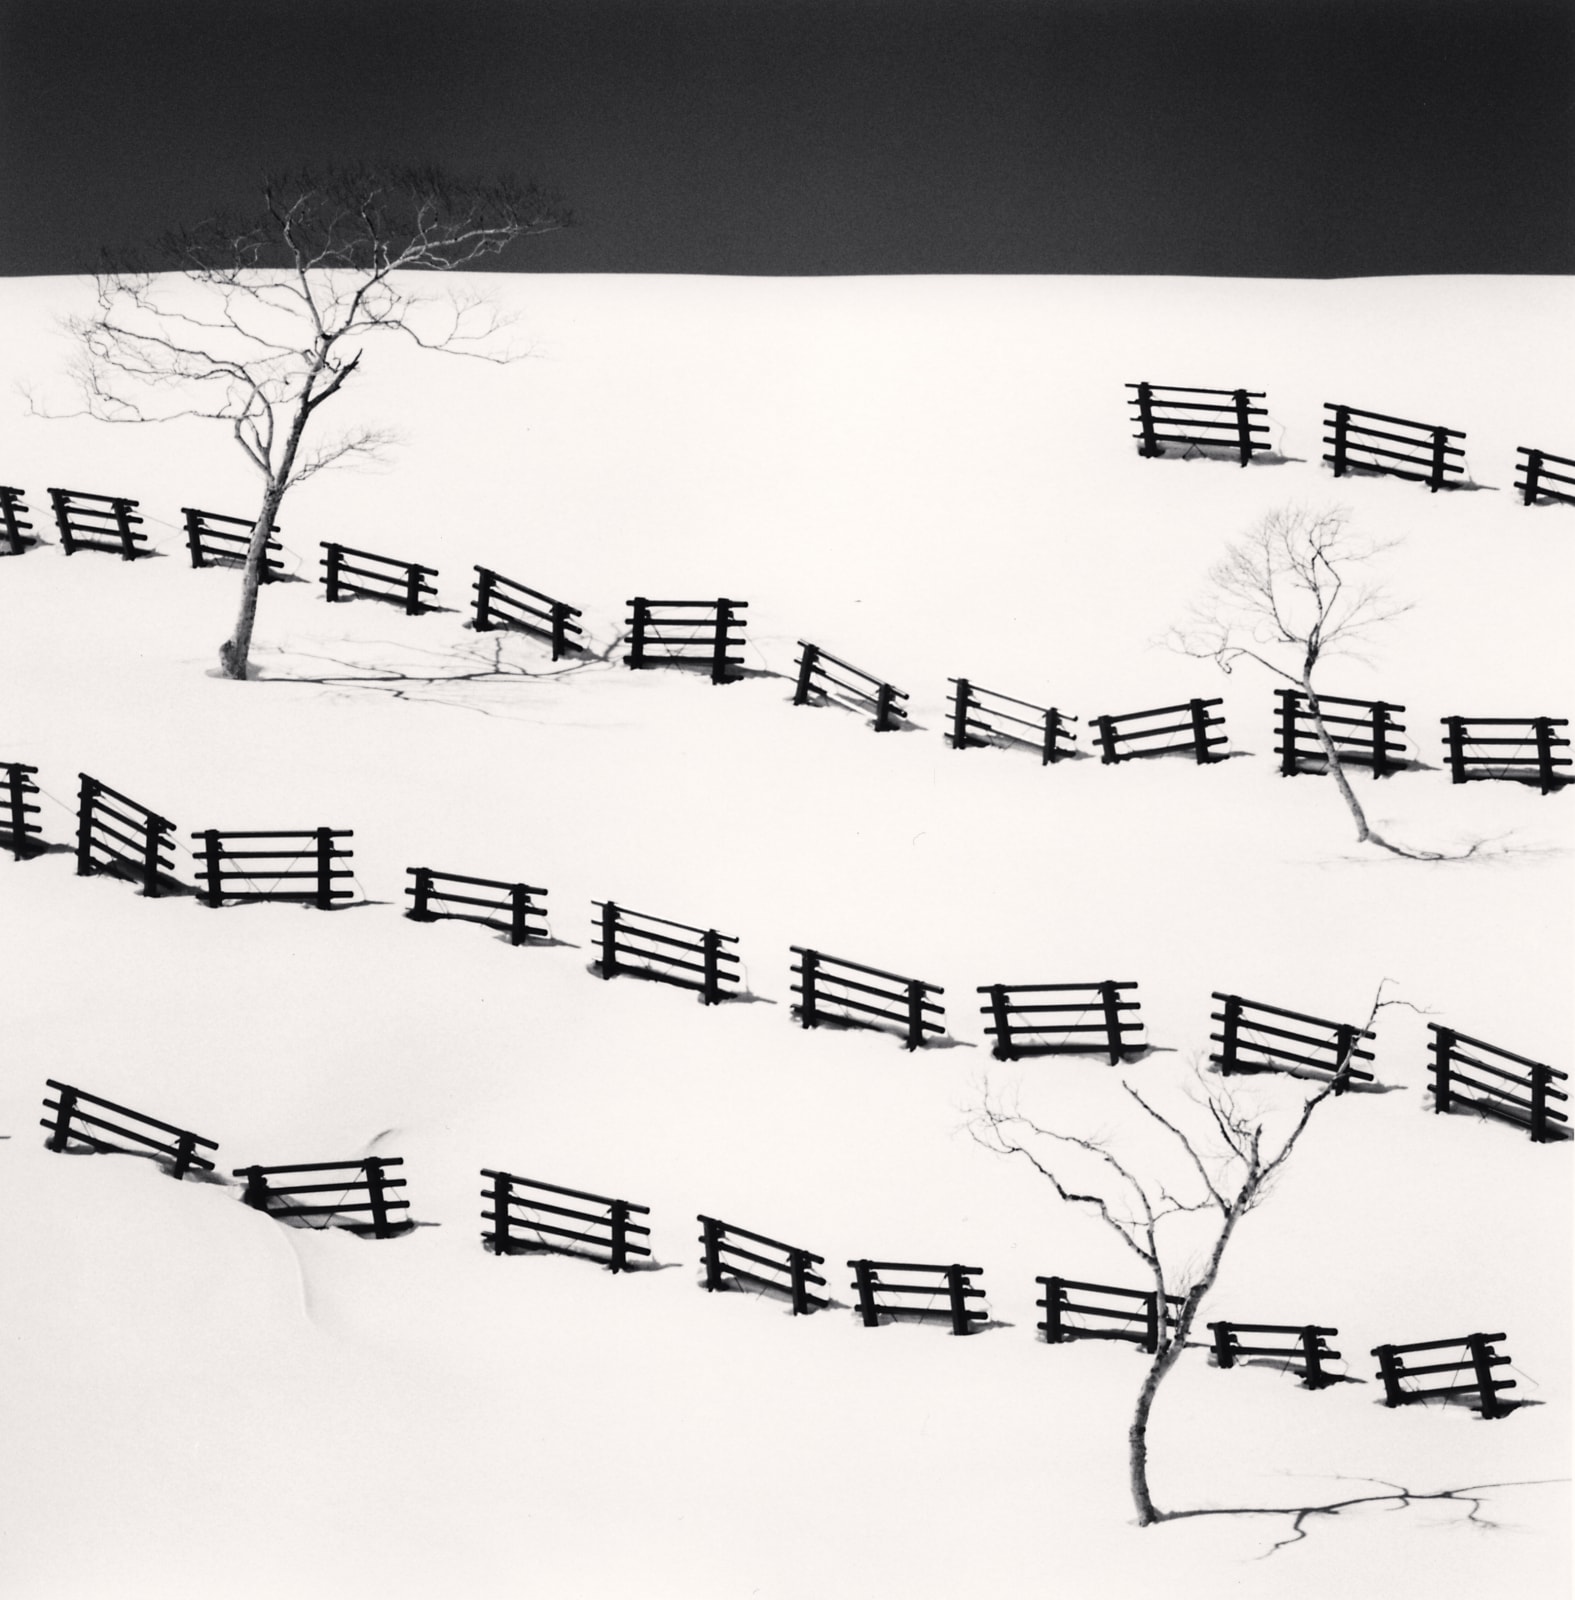 Michael Kenna, Thirty One Snow Fences, Bihoro, Hokkaido, Japan